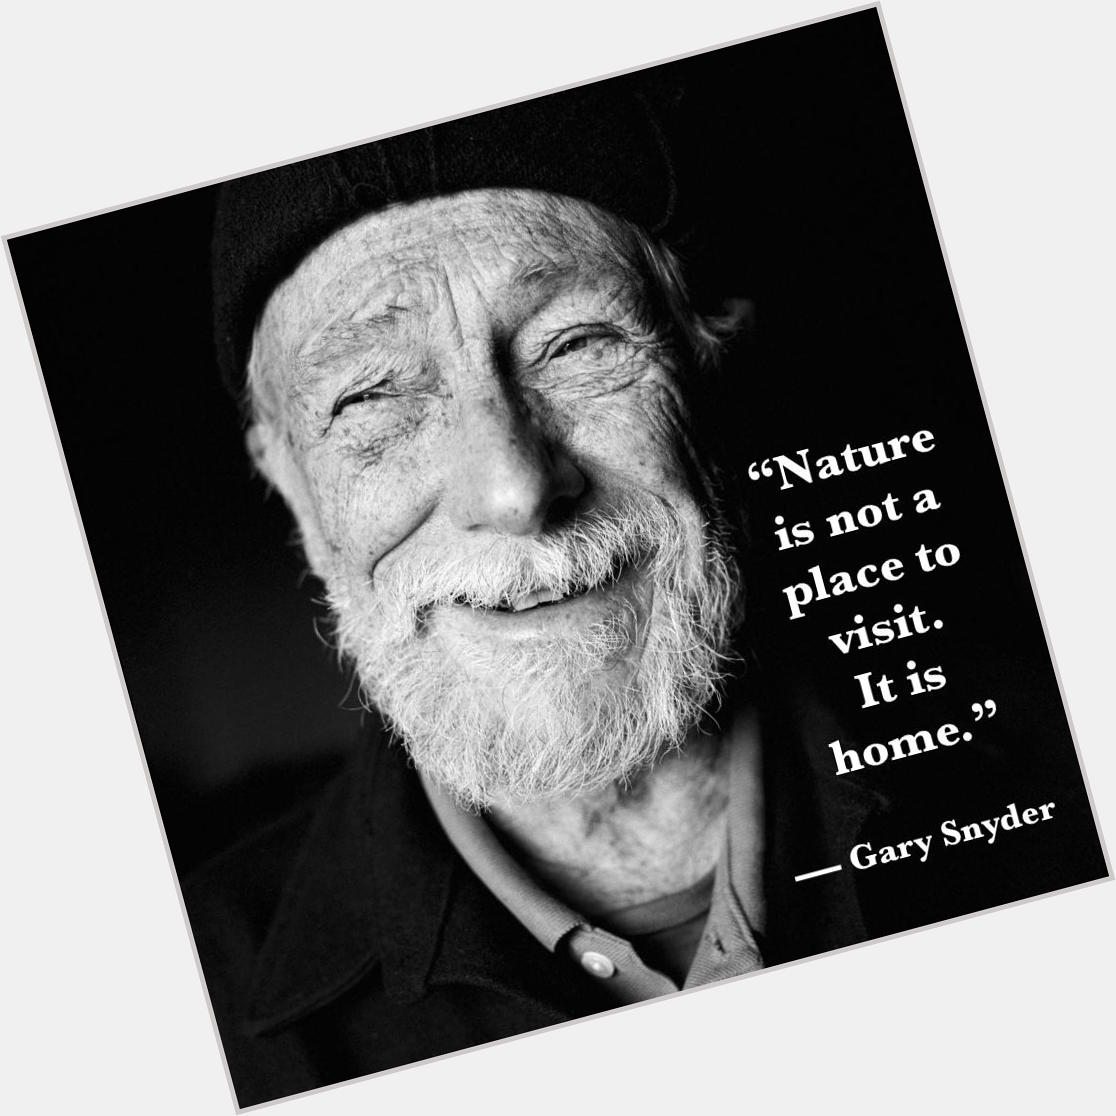 A poet, essayist, lecturer, and environmental activist turns 85! Happy birthday Gary Snyder! 